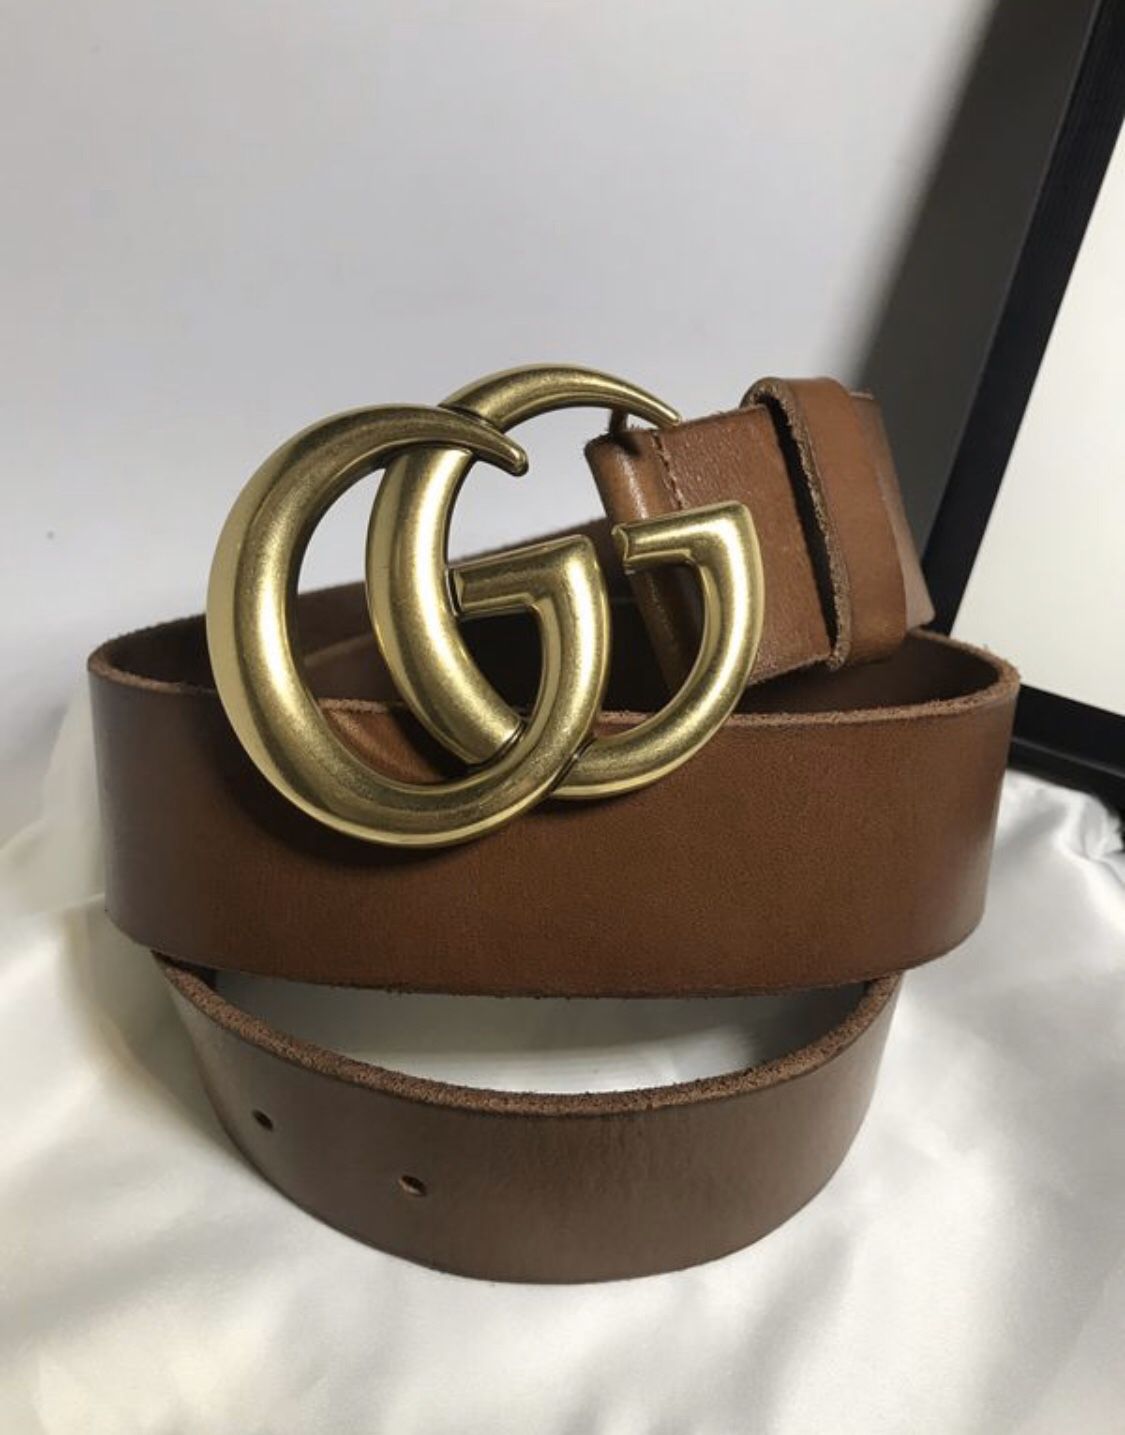 Gucci GG Belt (Brown w/gold buckle)